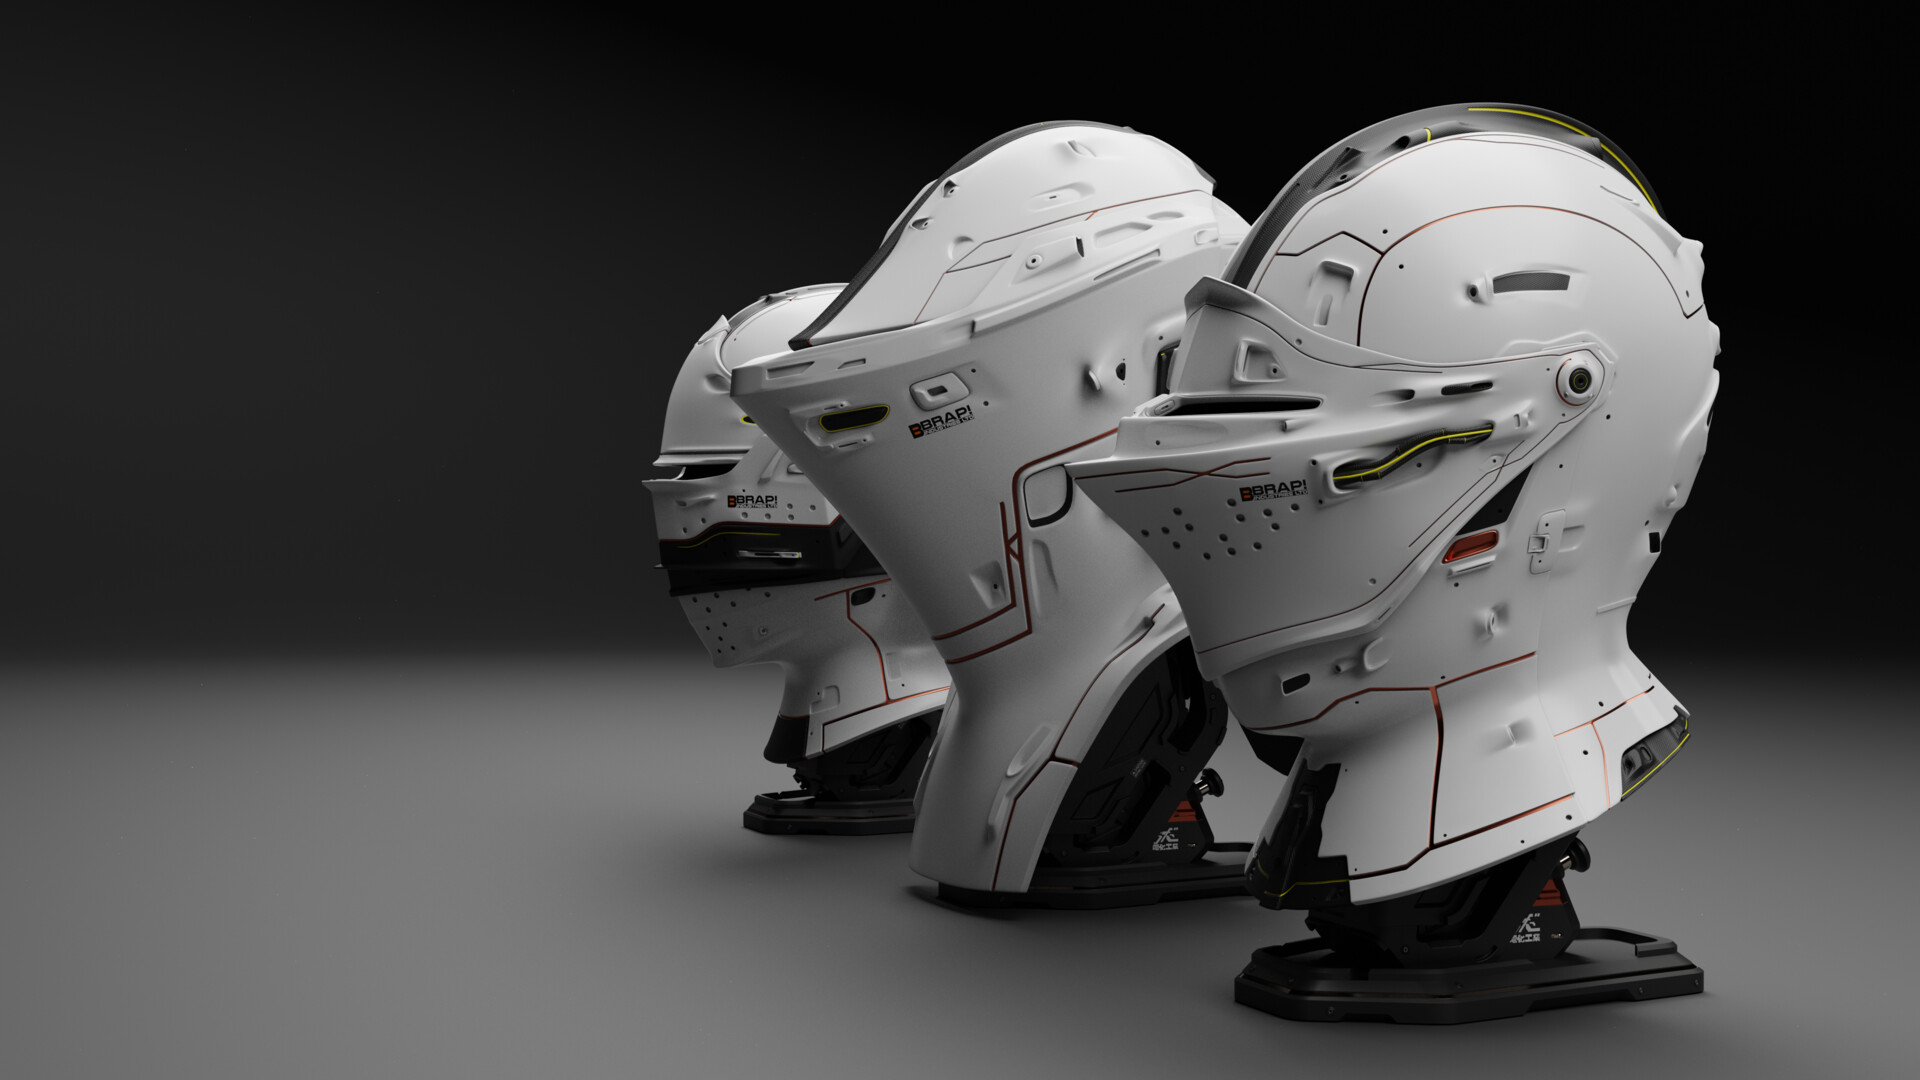 futuristic helmets